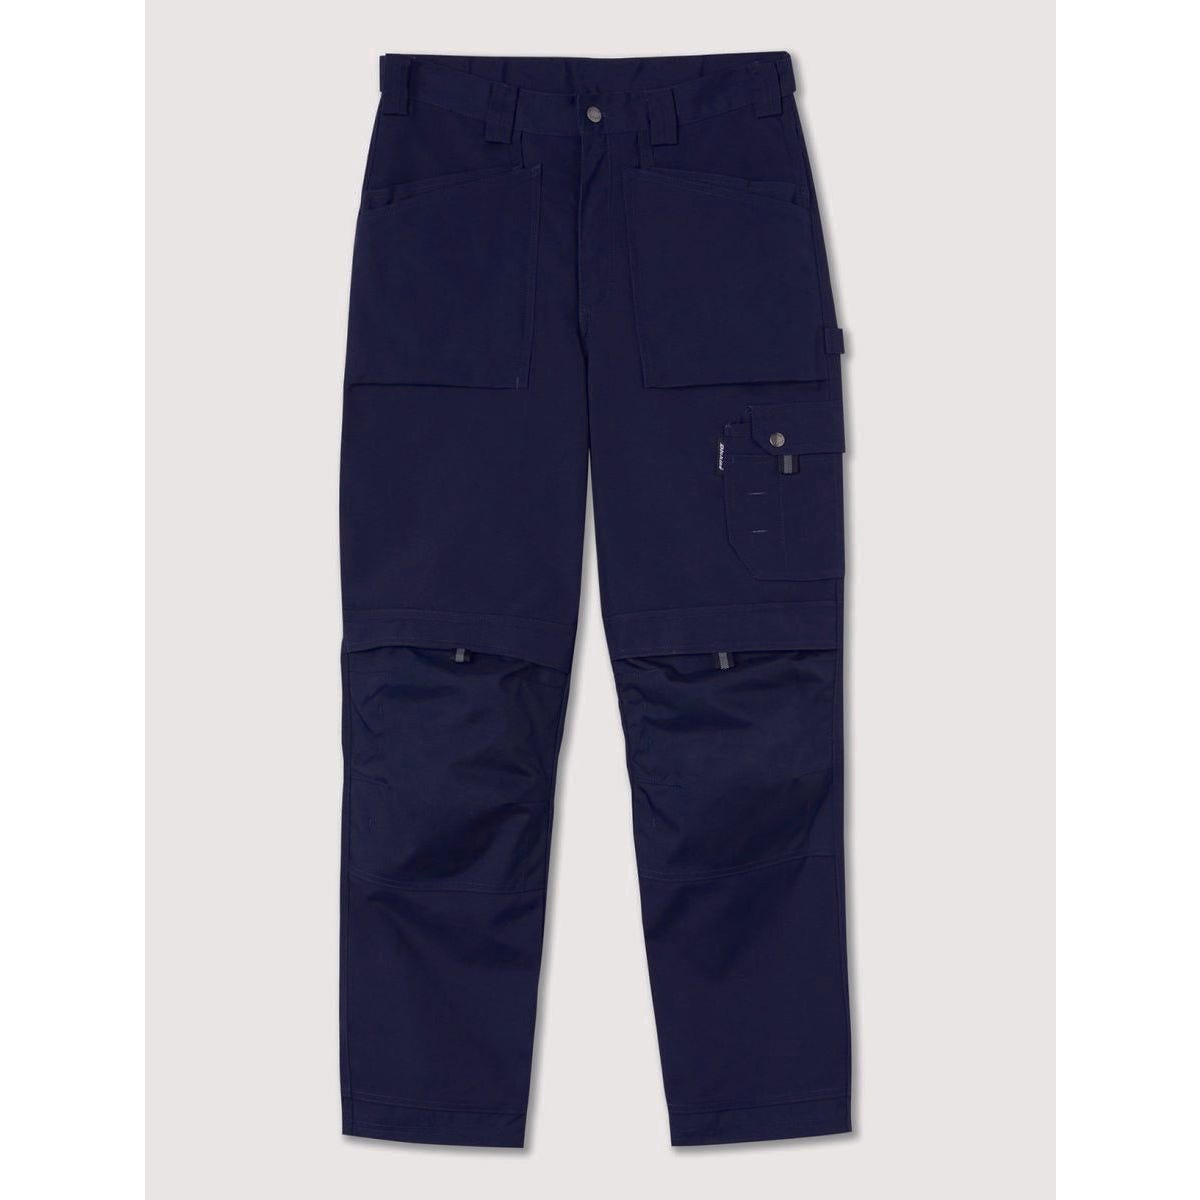 Pantalon Eisenhower multi-poches Bleu marine - Dickies - Taille 48 5